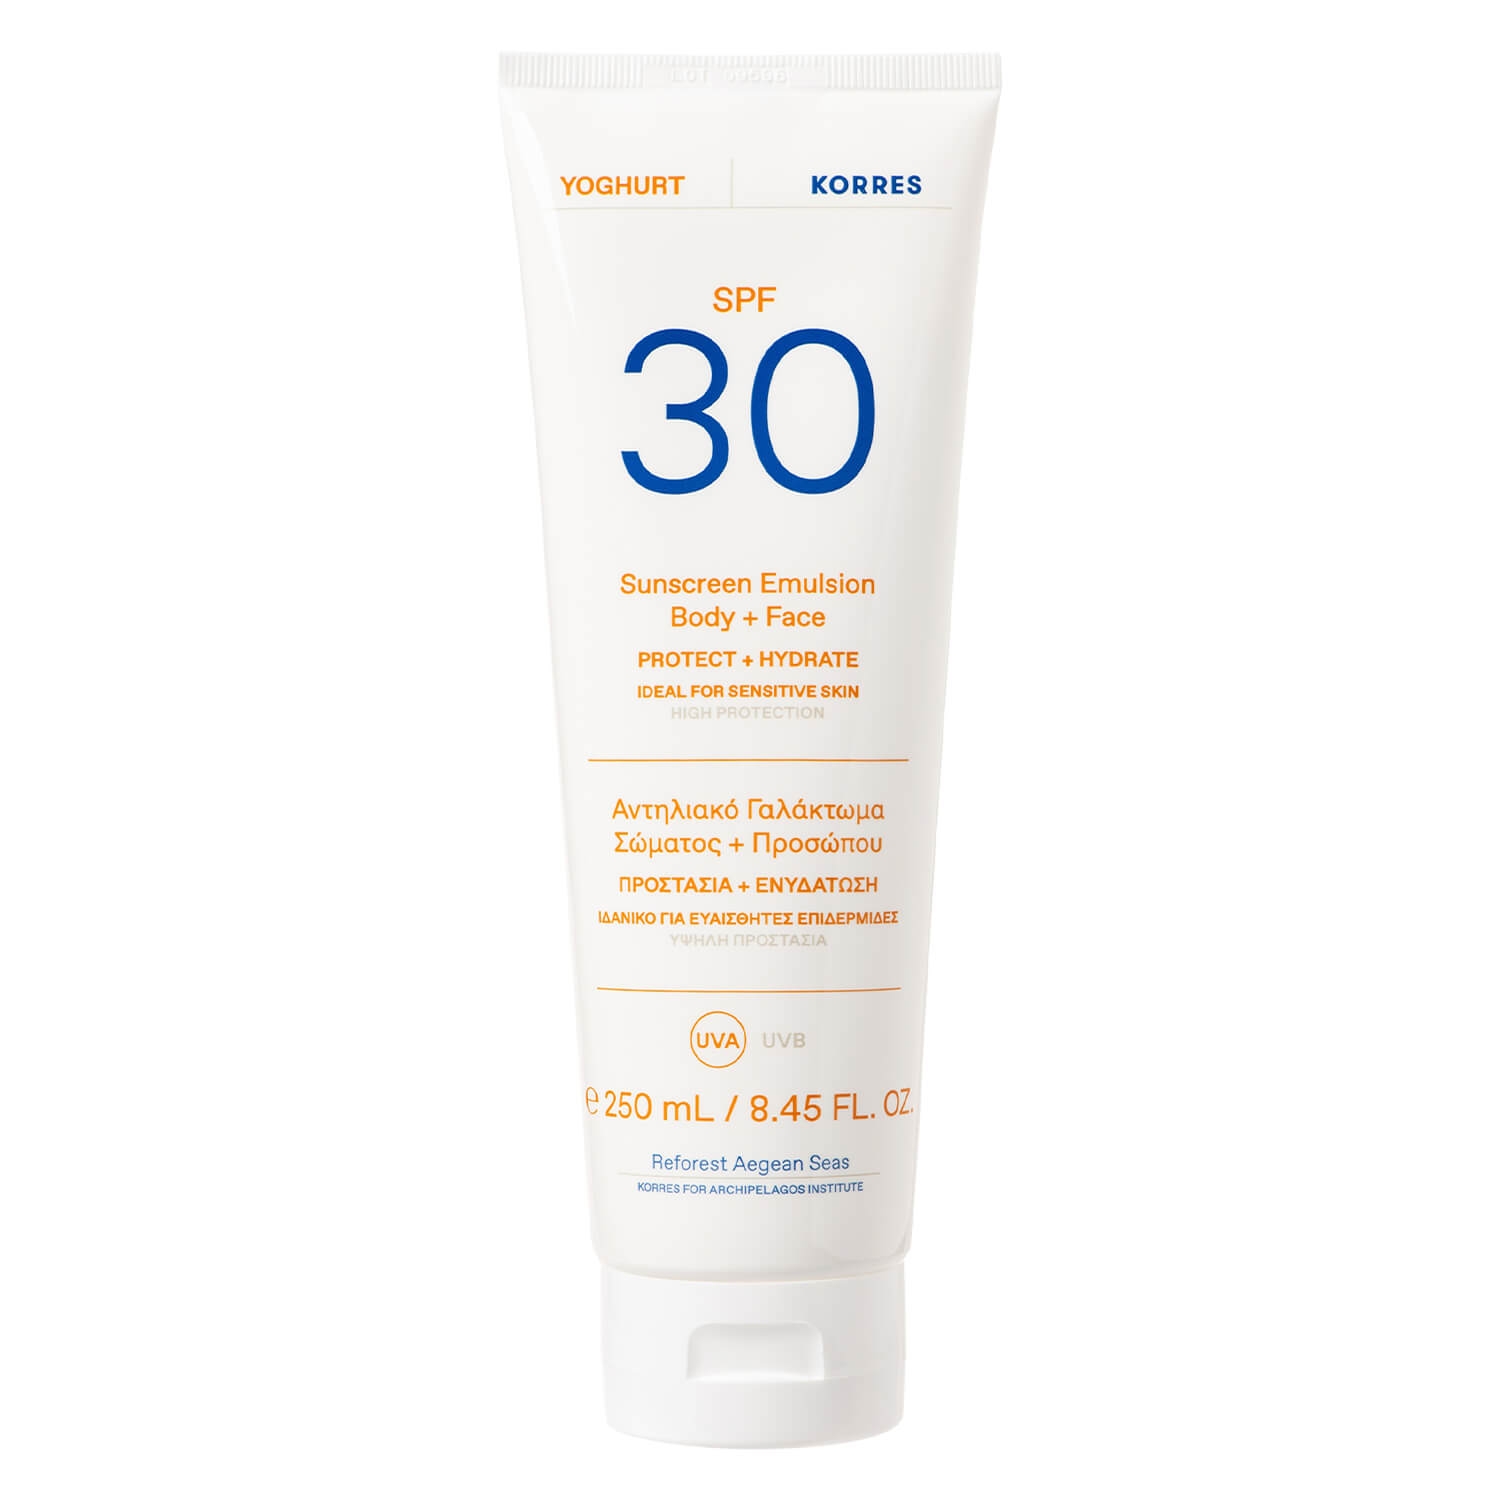 Image du produit de Korres Care - Yoghurt Sunscreen Emulsion Body + Face SPF30